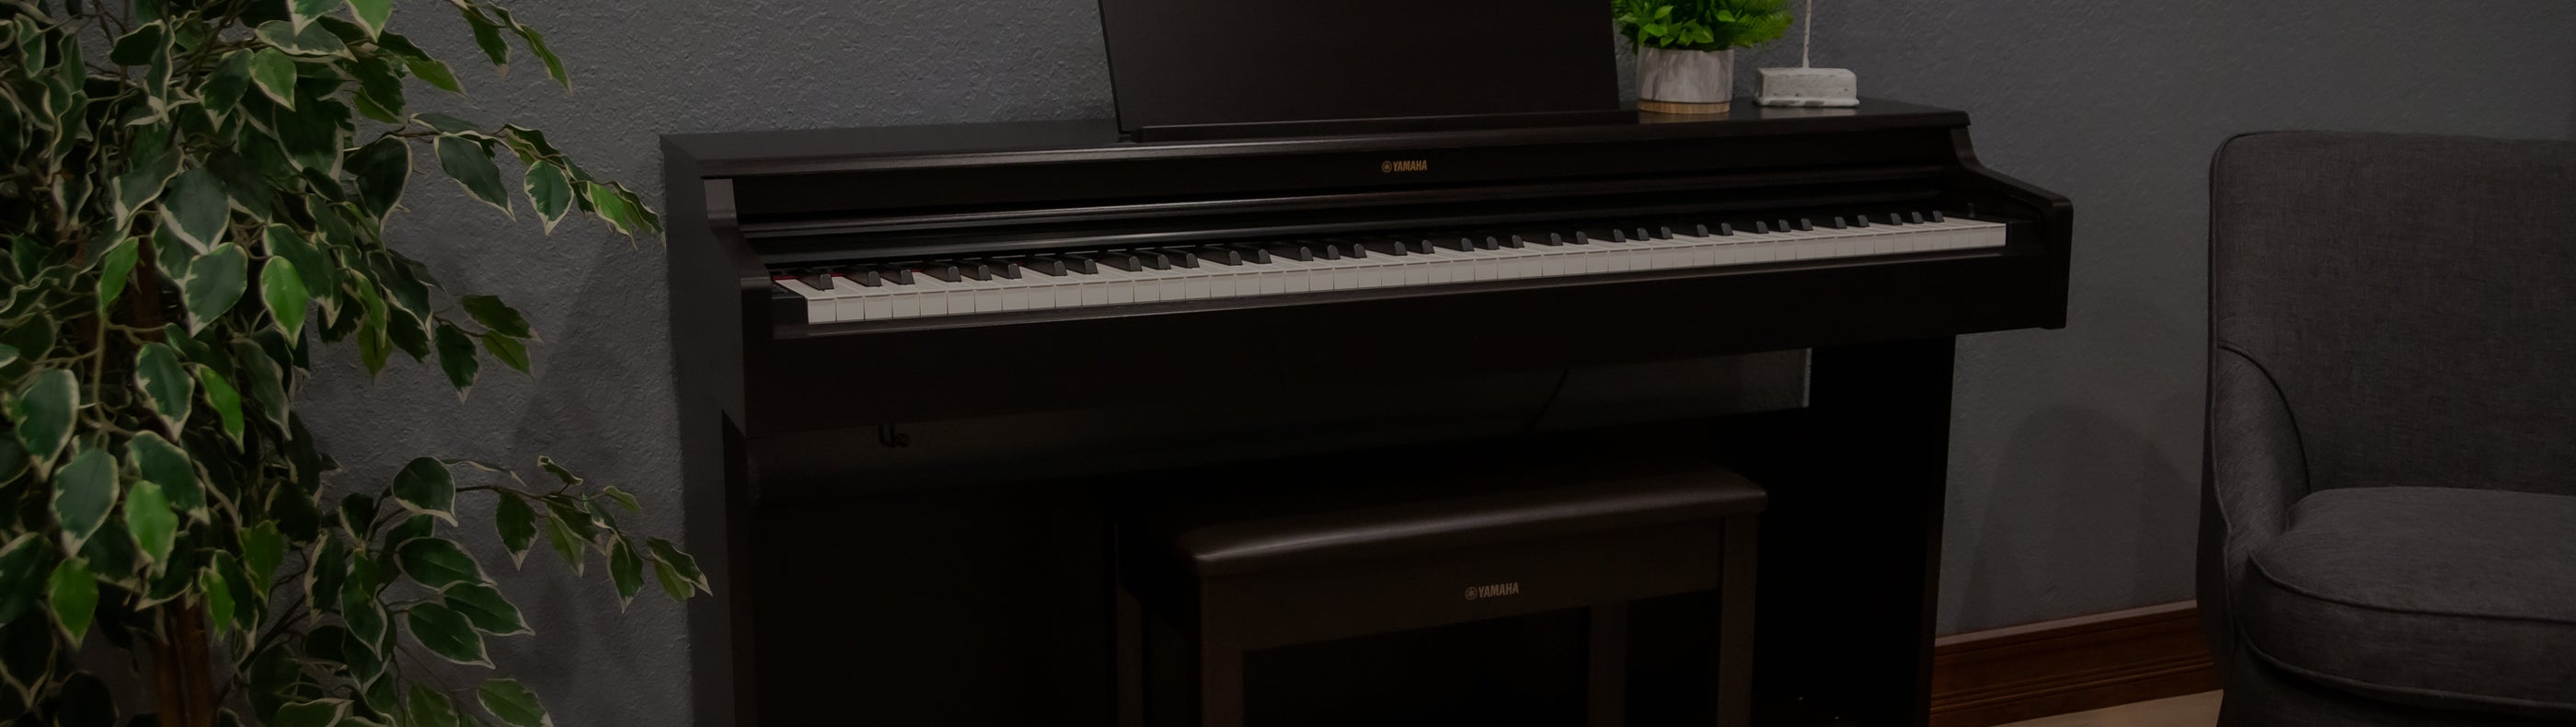 Yamaha Arius YDP-165 Traditional Console Digital Piano With Bench Black  Walnut